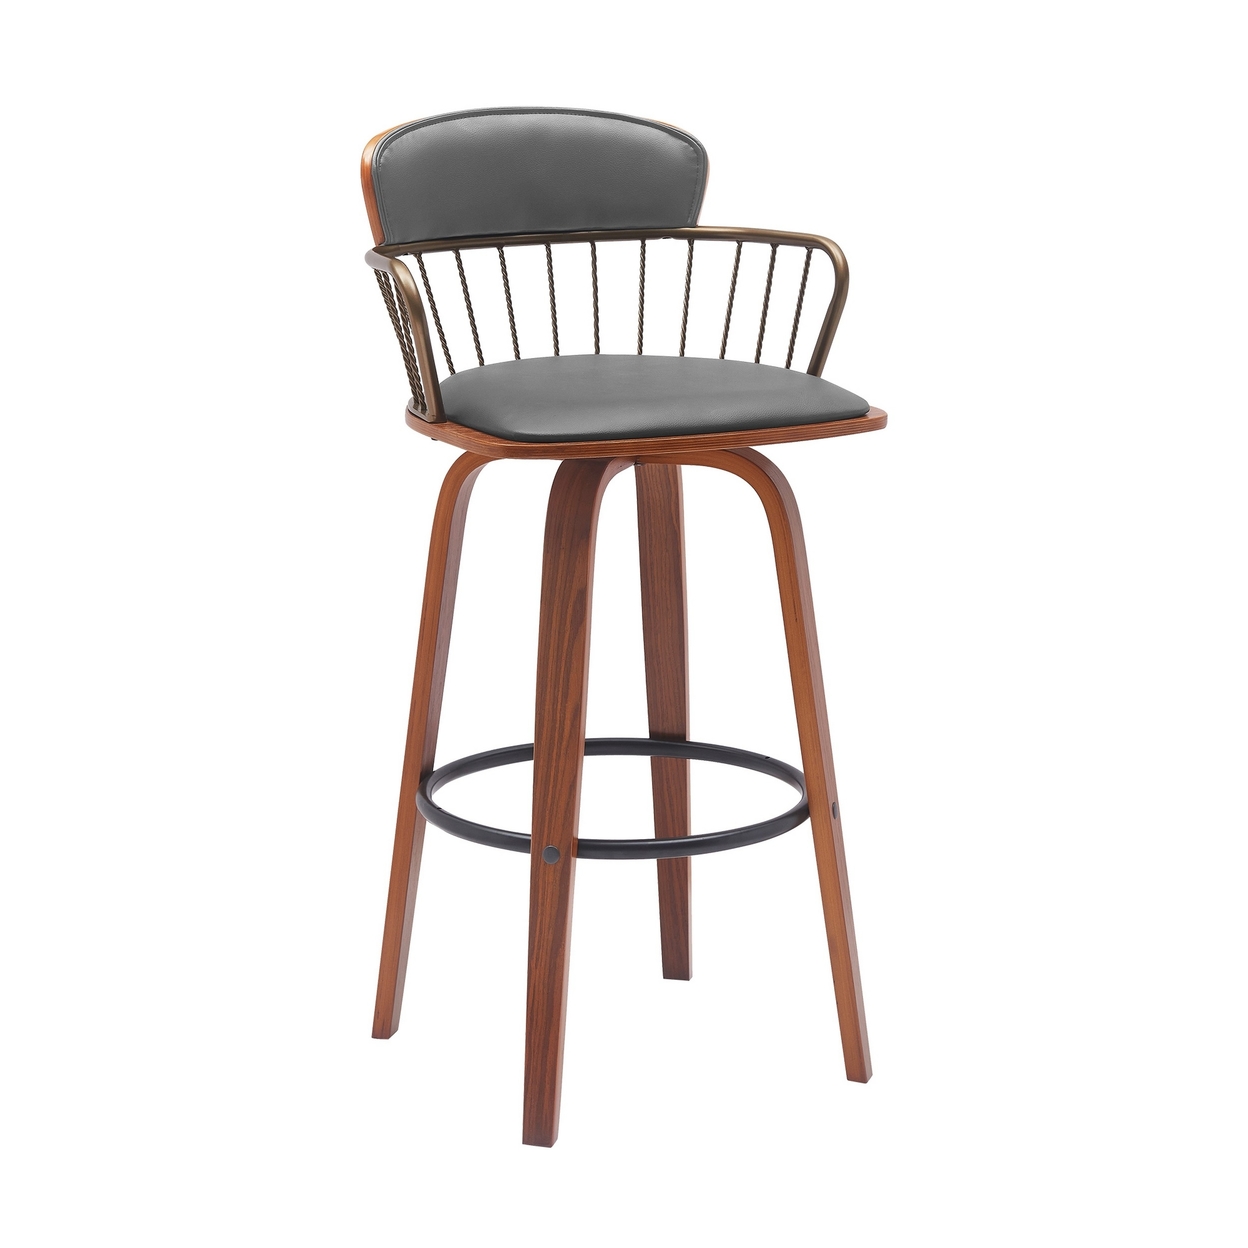 Wiz 30 Inch Barstool Chair, Slatted Back, Gray Faux Leather, Walnut Brown - Saltoro Sherpi